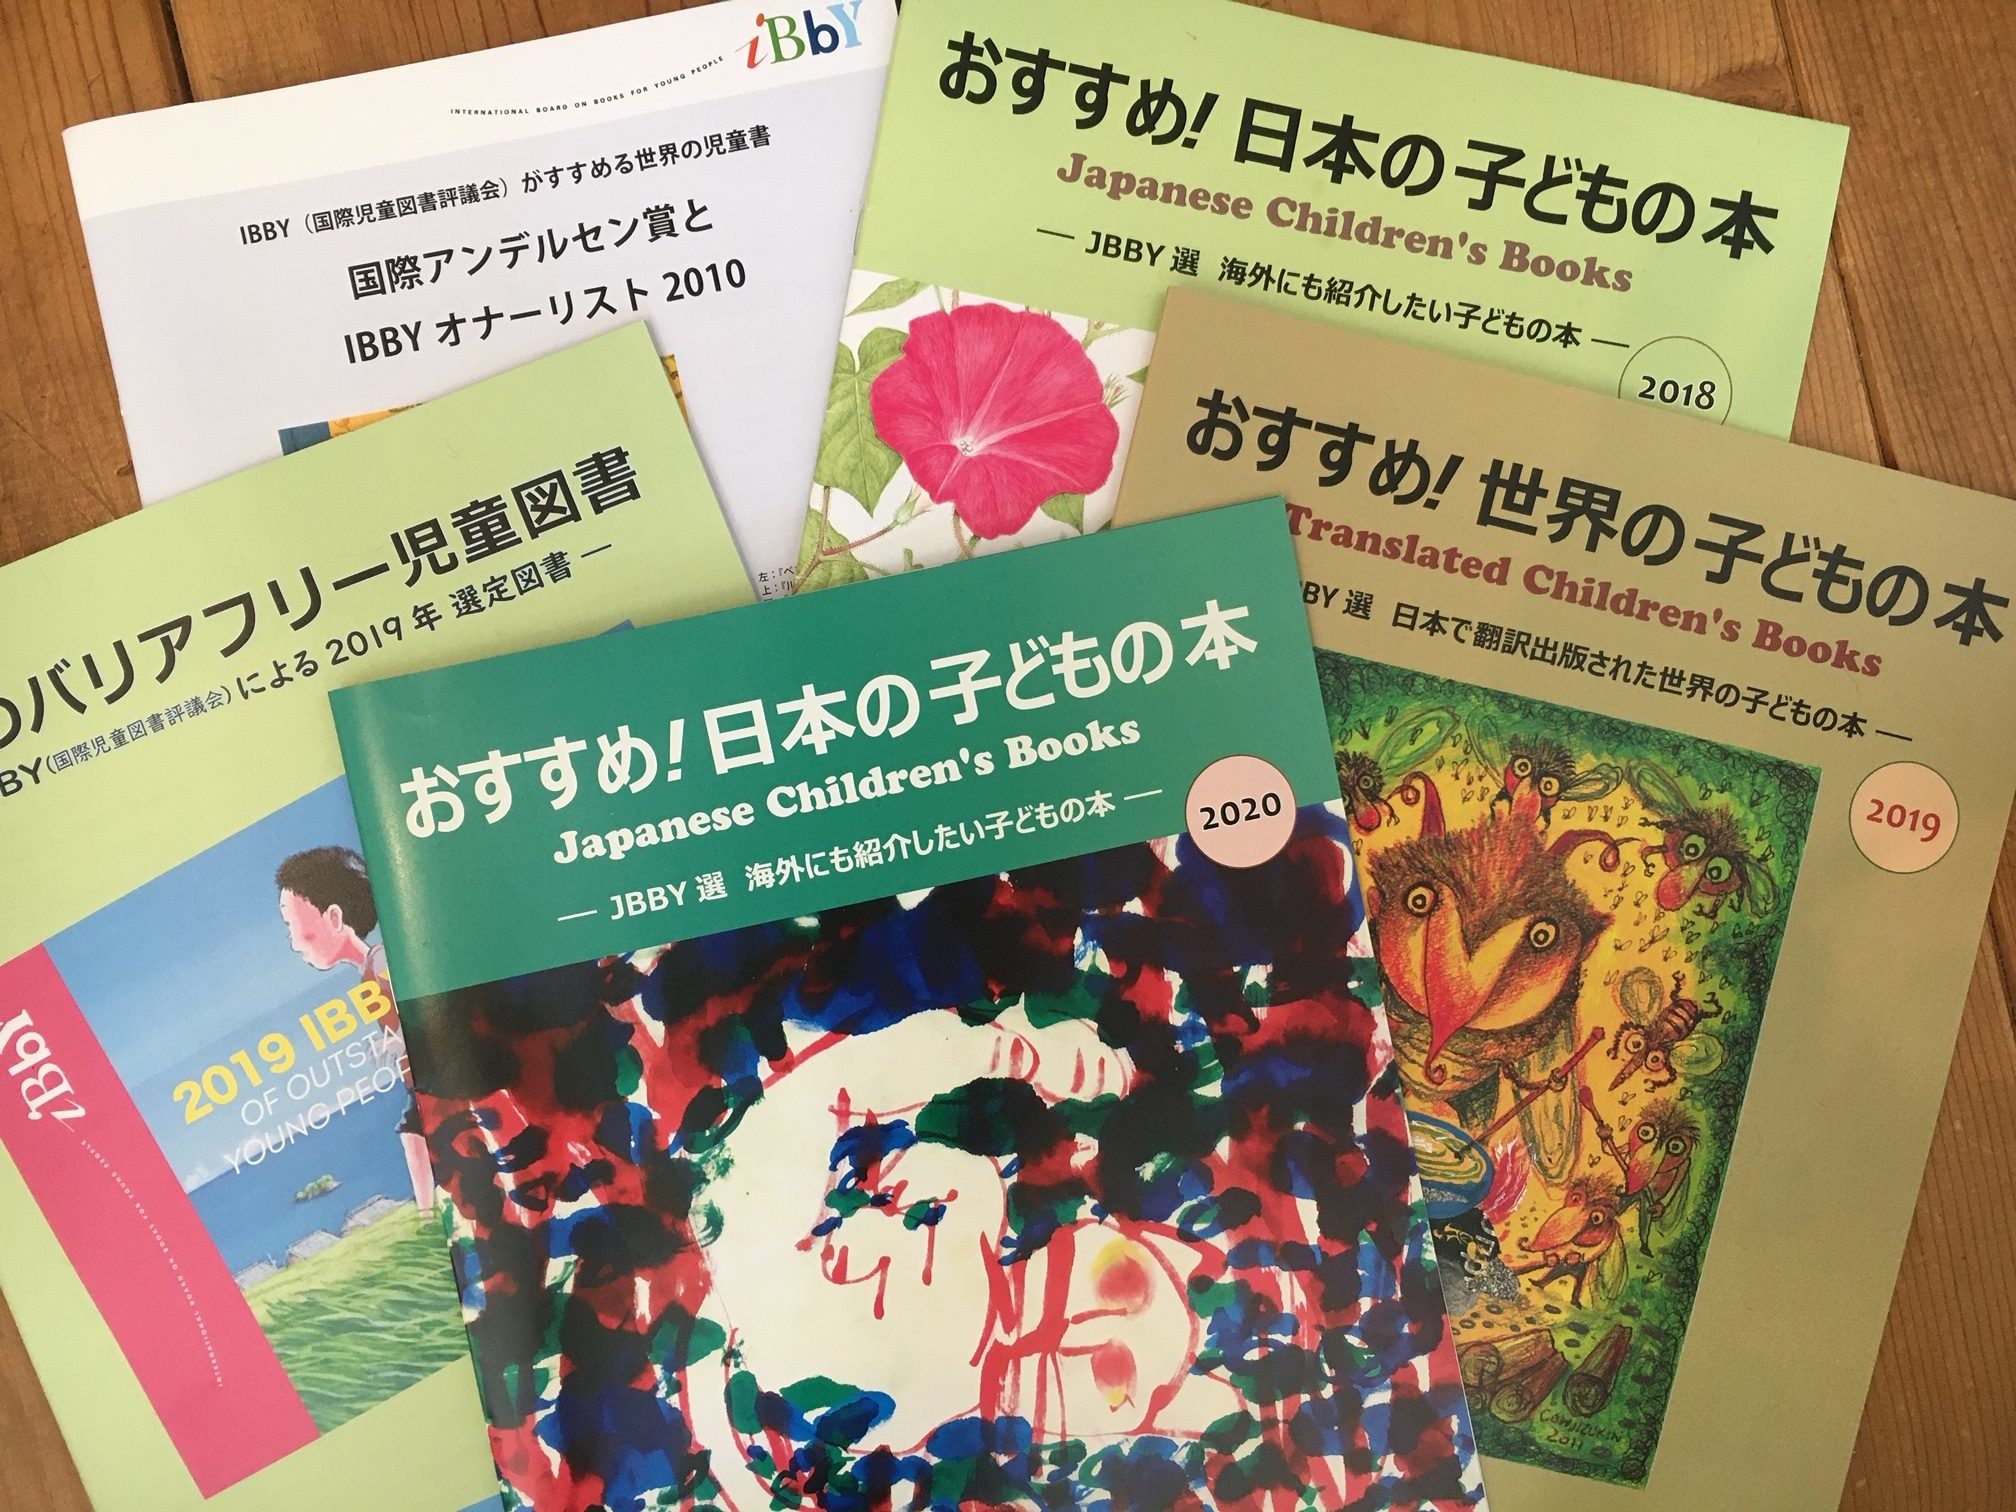 Jbby 日本国際児童図書評議会